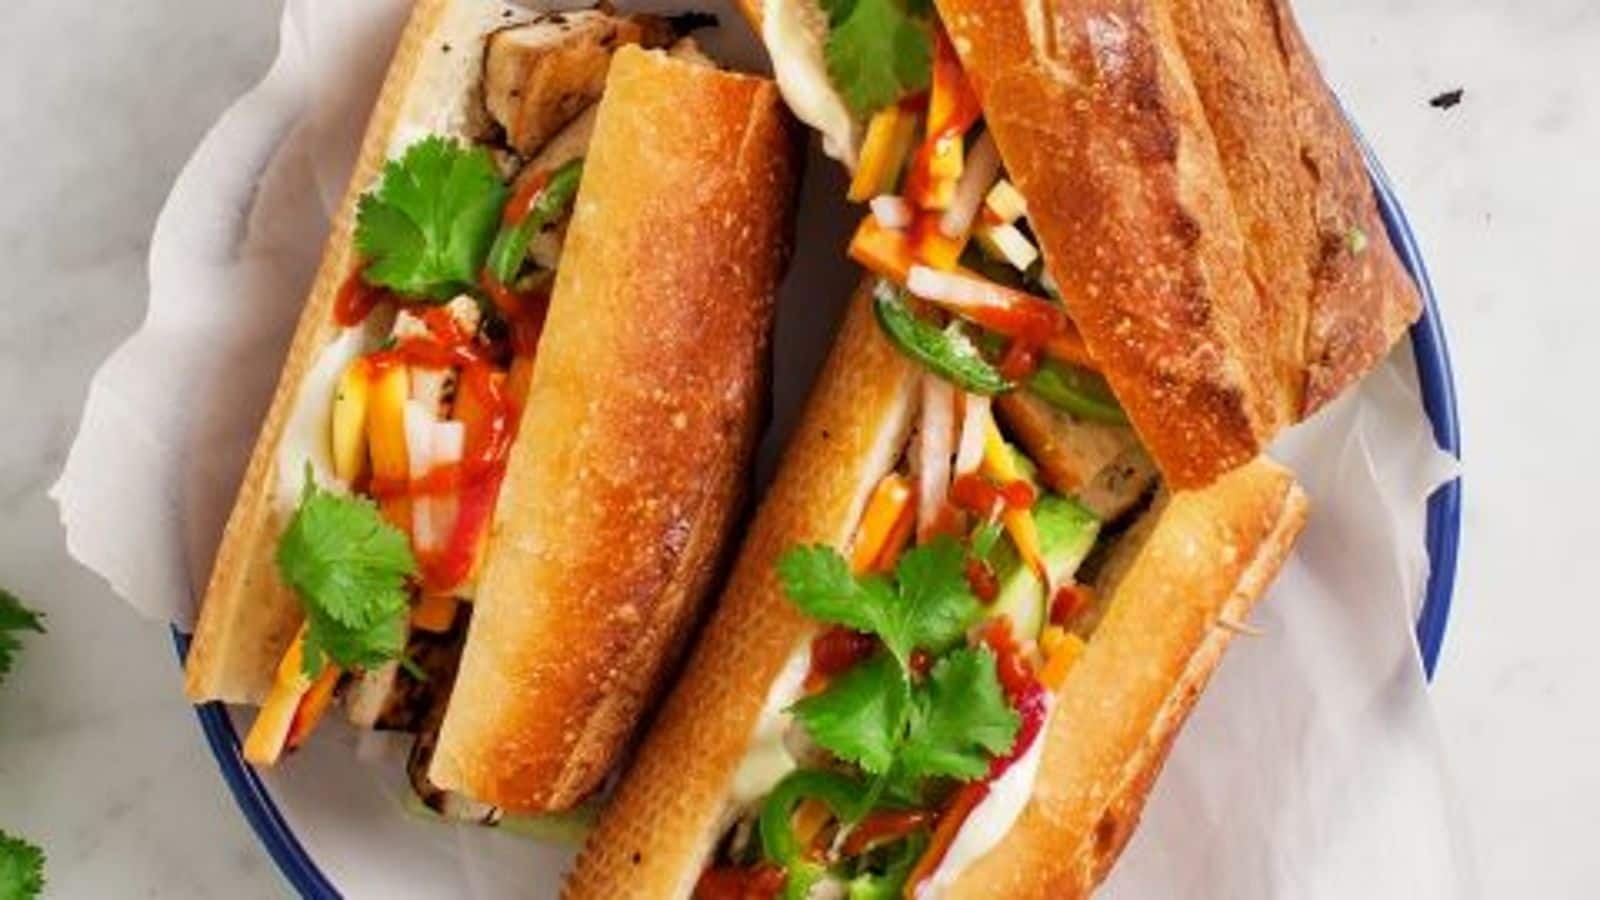 Prepare Vietnamese banh mi sandwich with this recipe